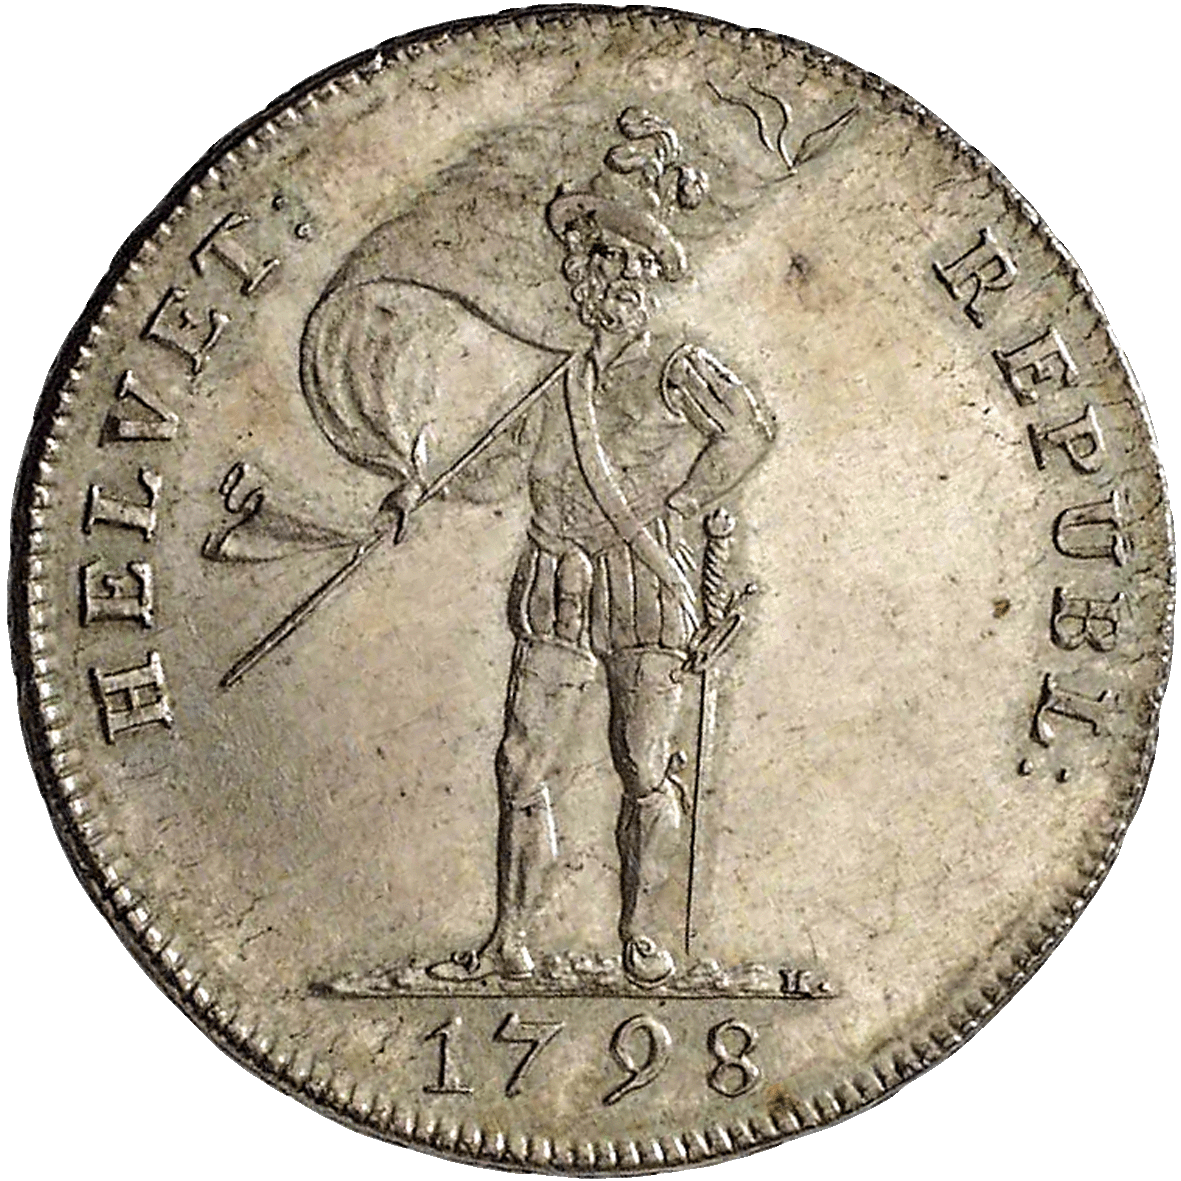 Helvetische Republik, 20 Batzen 1798 (obverse)